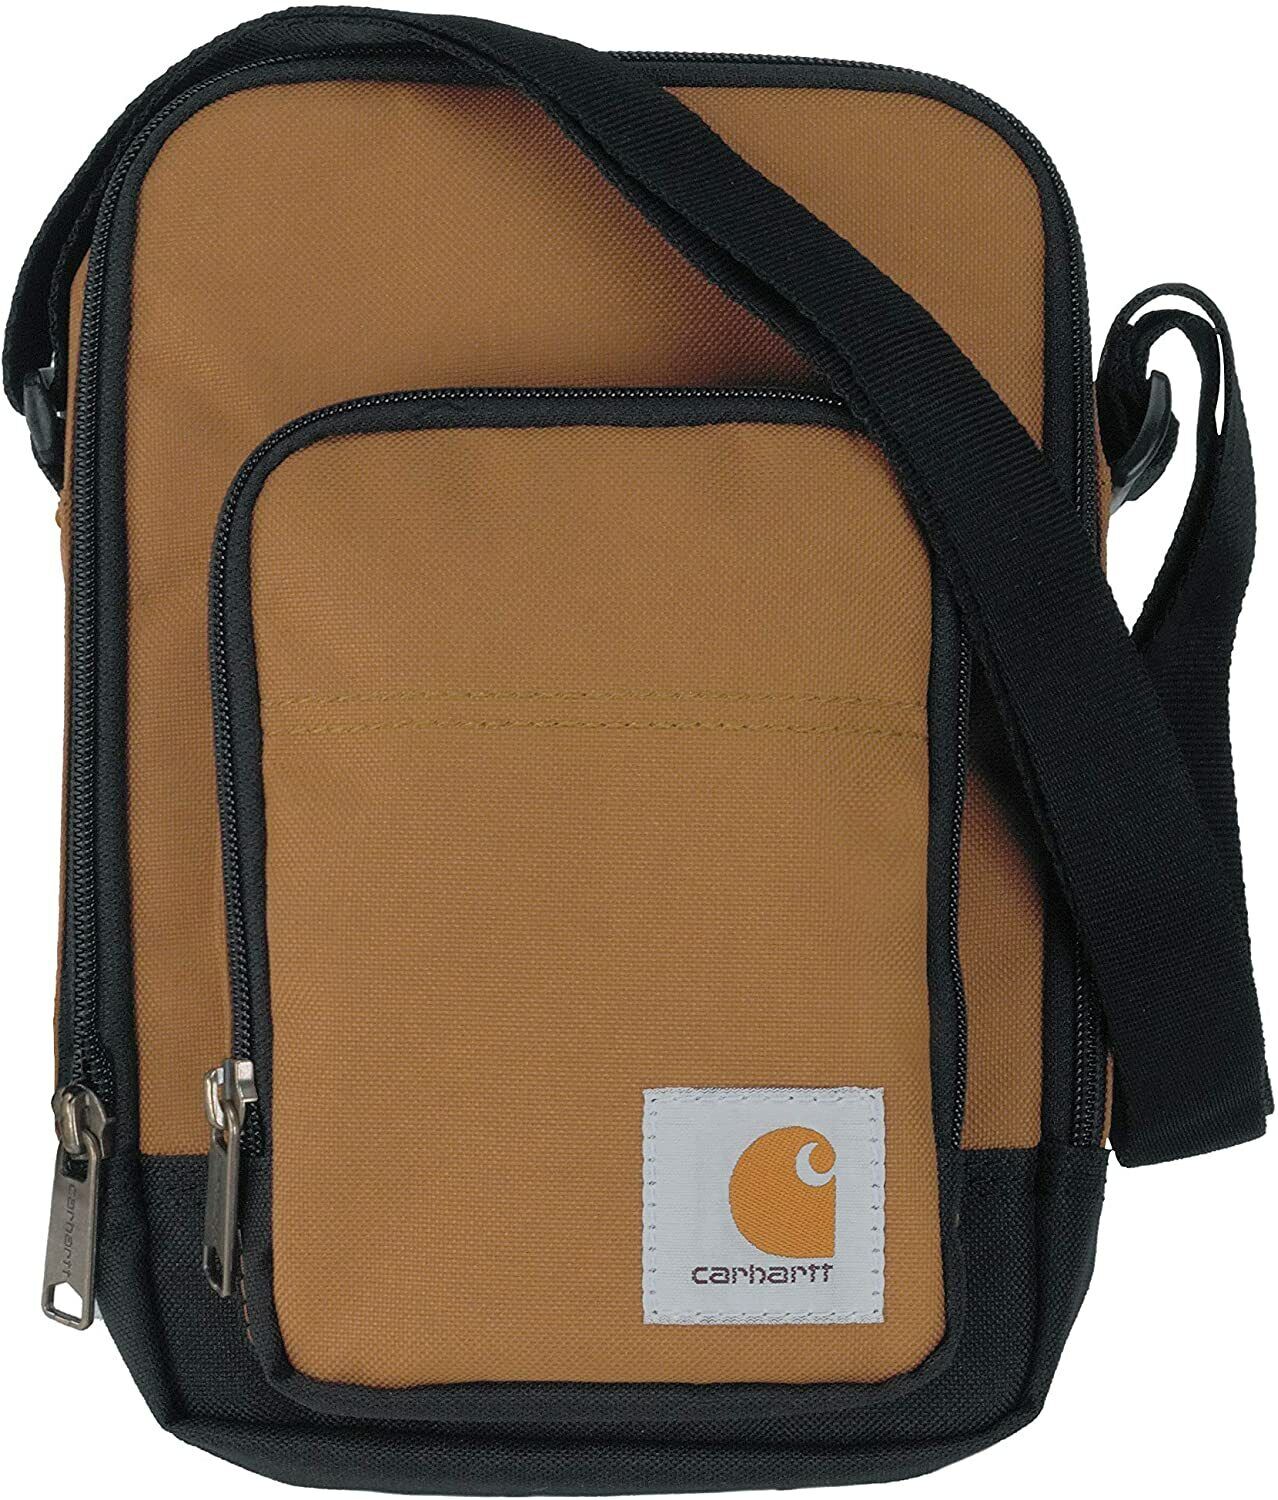 Carhartt Cross Body Gear Organizer Bag